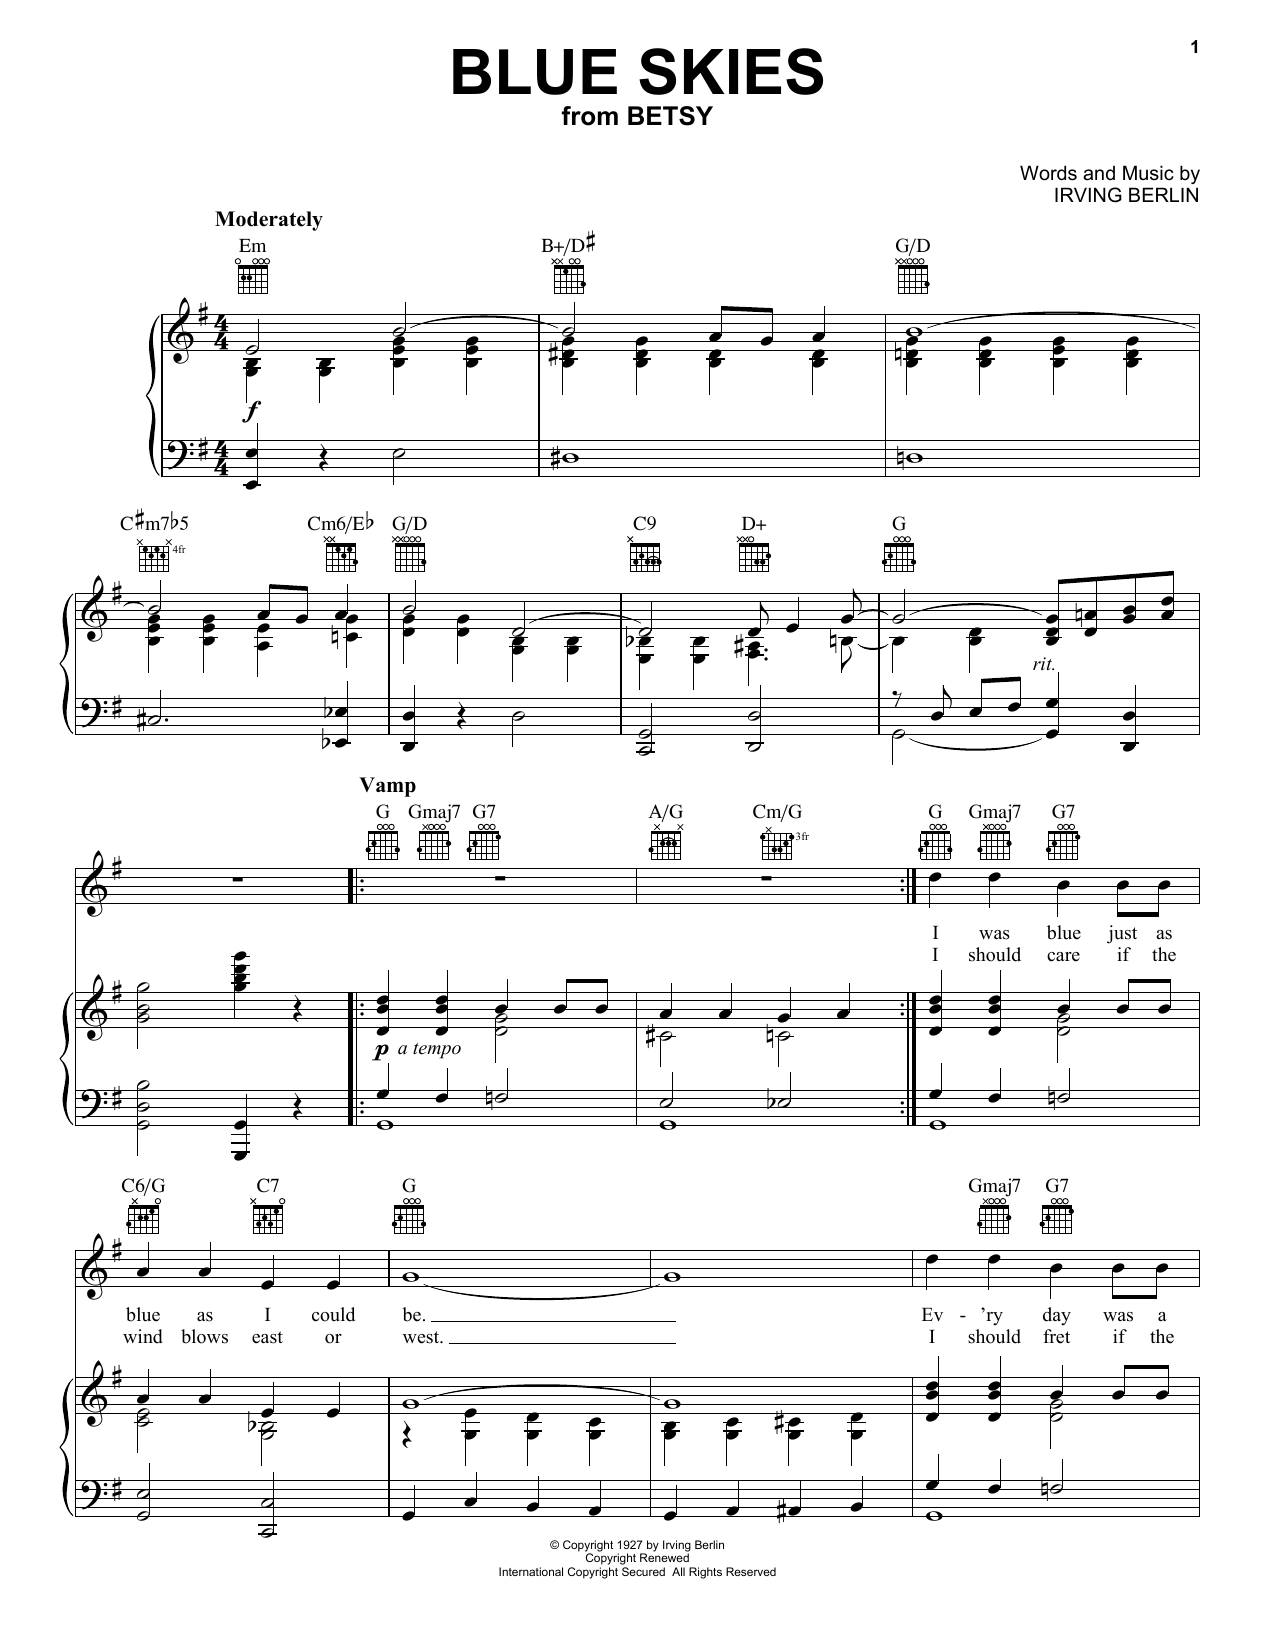 Irving Berlin Blue Skies Sheet Music Notes & Chords for Banjo - Download or Print PDF